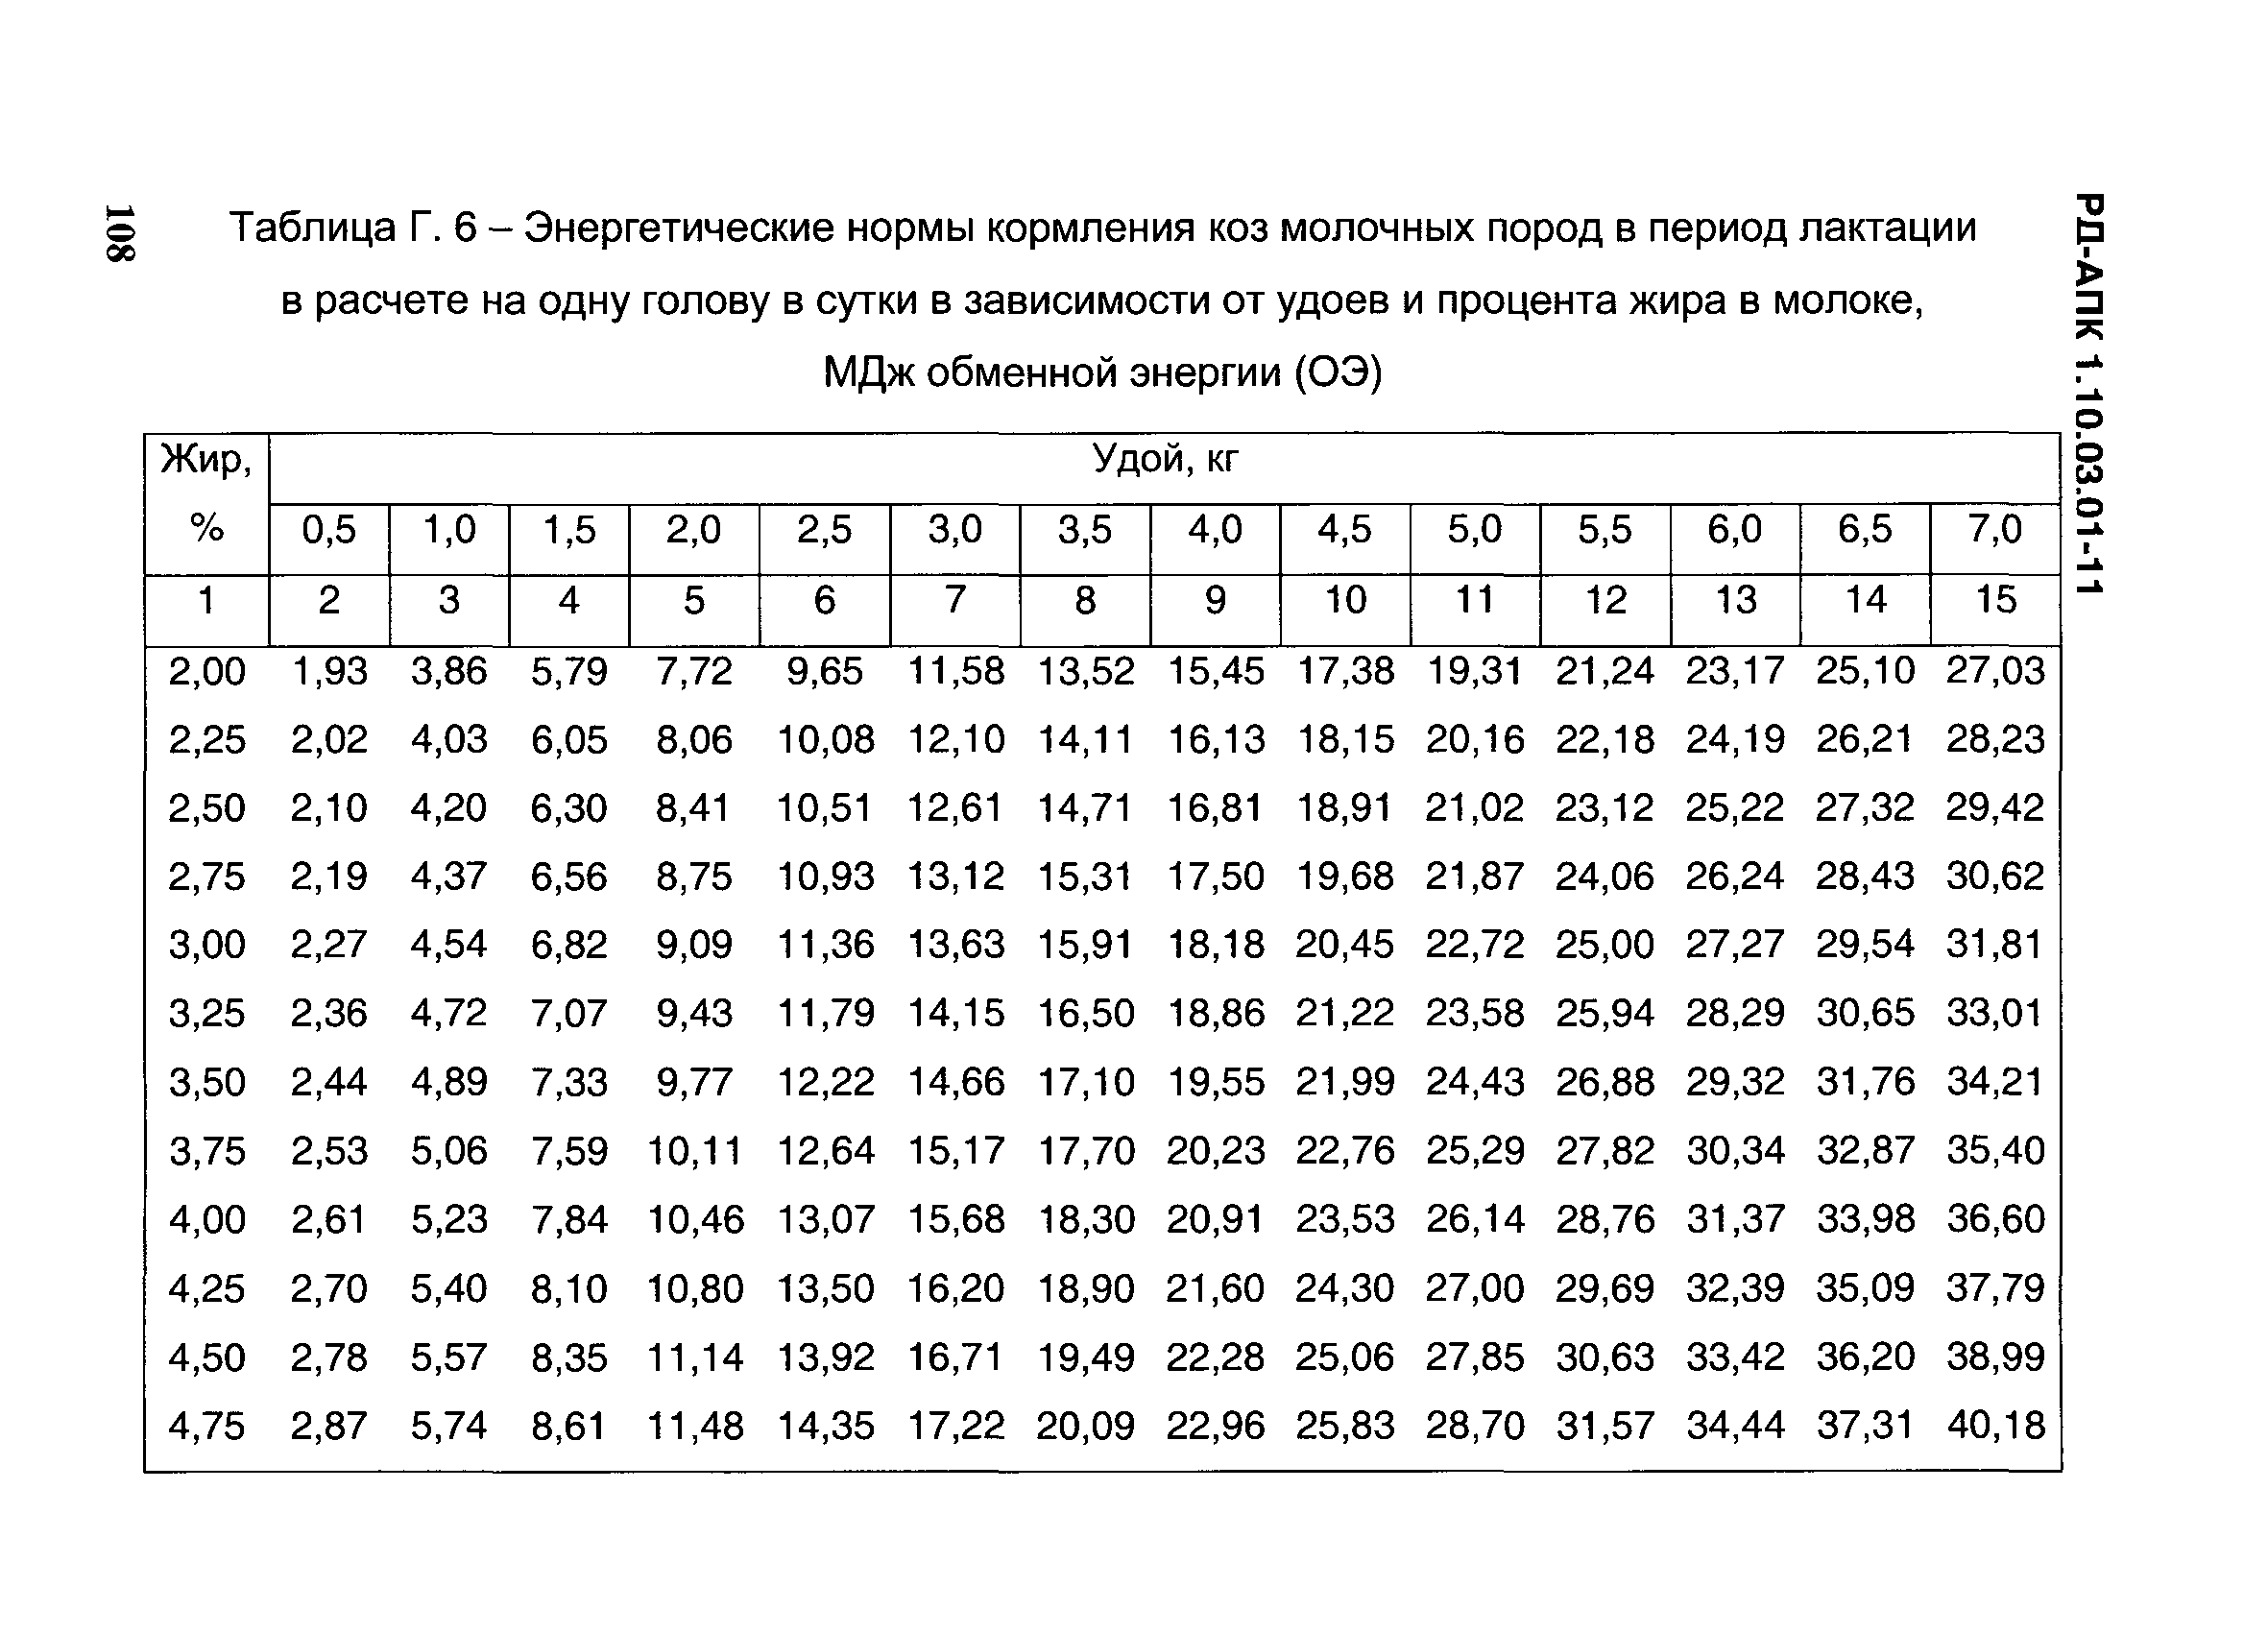 РД-АПК 1.10.03.01-11